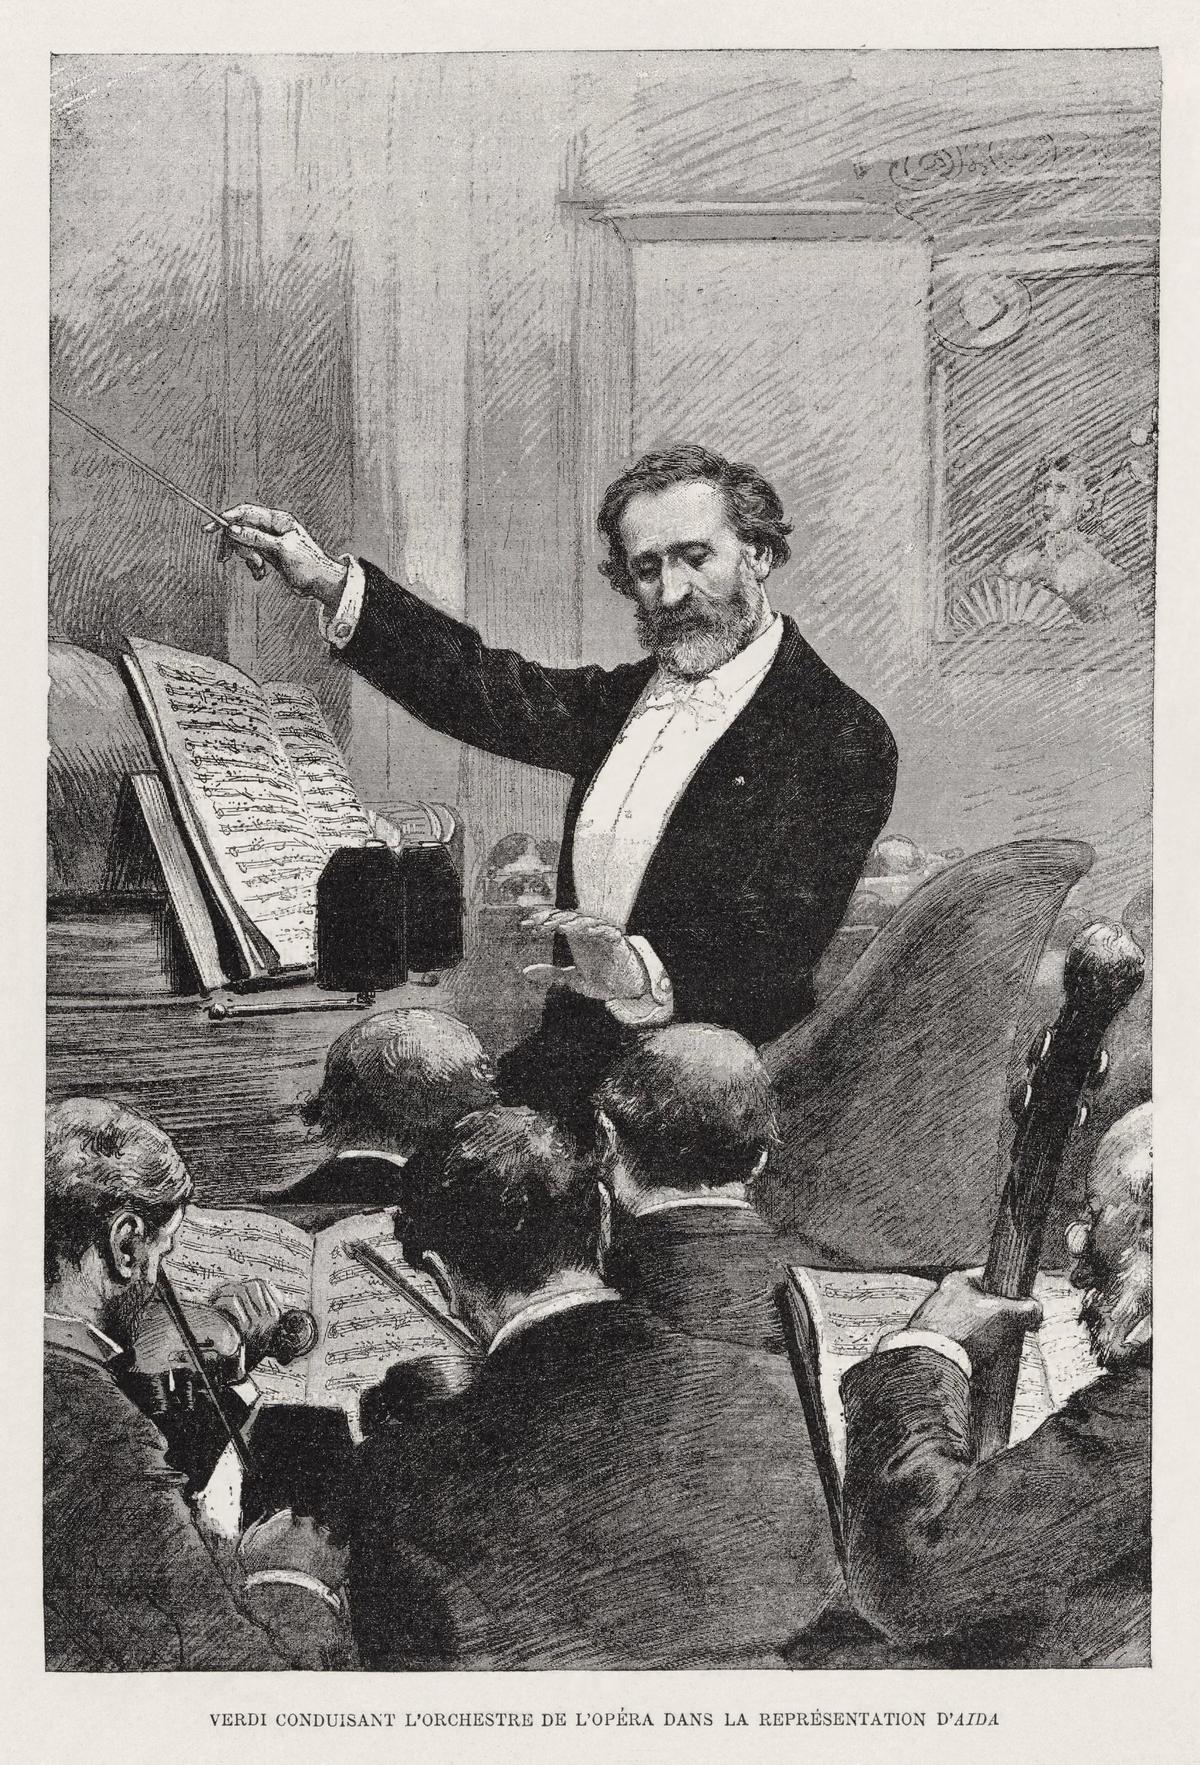  Illustration of Giuseppe Verdi conducting at the Palais Garnier by Adrien Marie, 1881. (public domain)